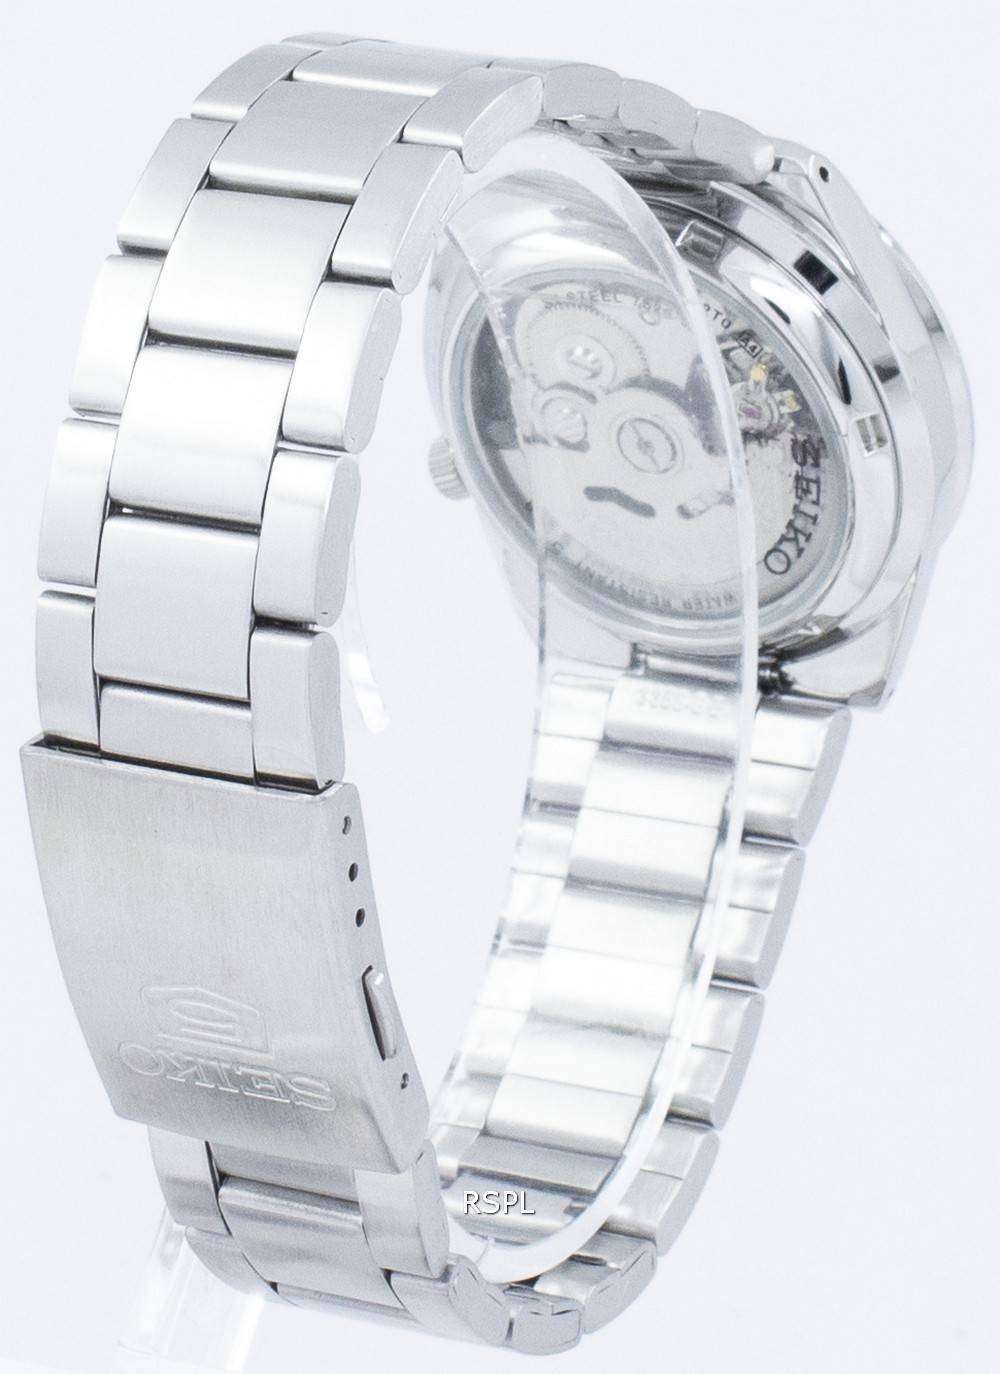 Seiko 5 Automatic SNKD99 SNKD99K1 SNKD99K Men's Watch